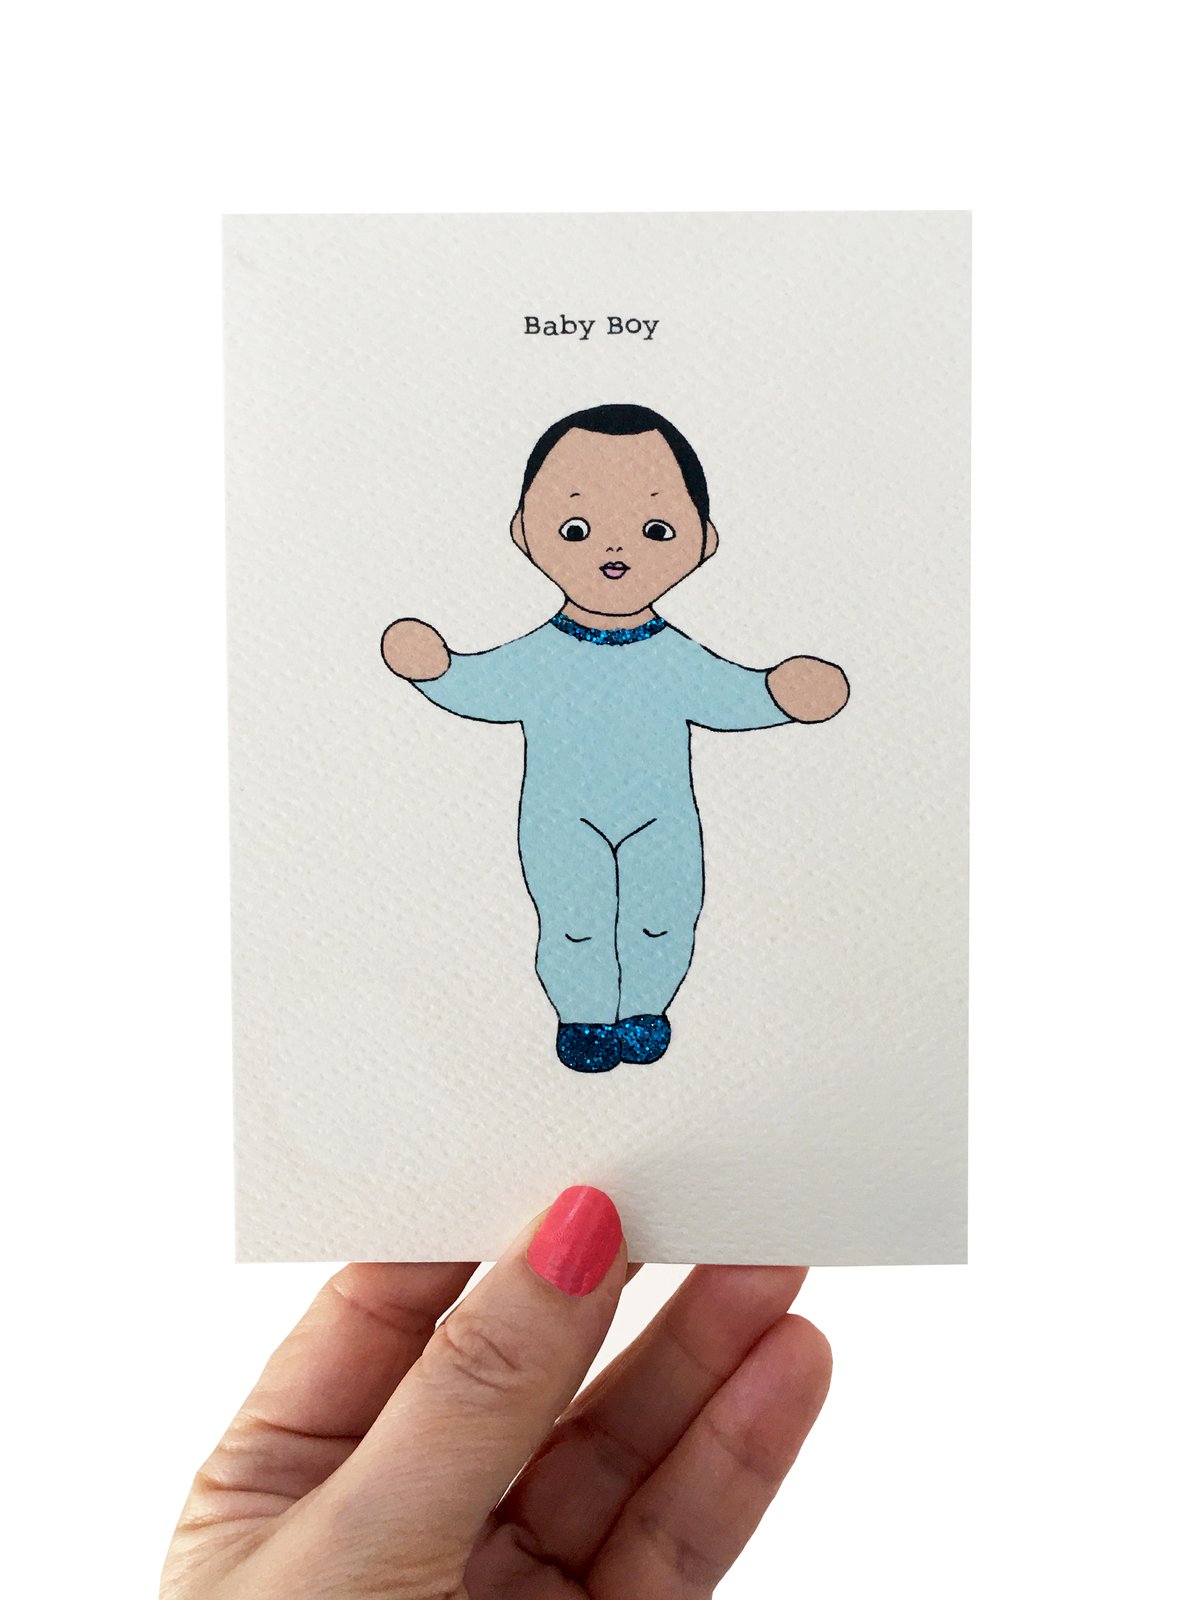 Baby Boy Card - Dark Hair or Blonde Hair